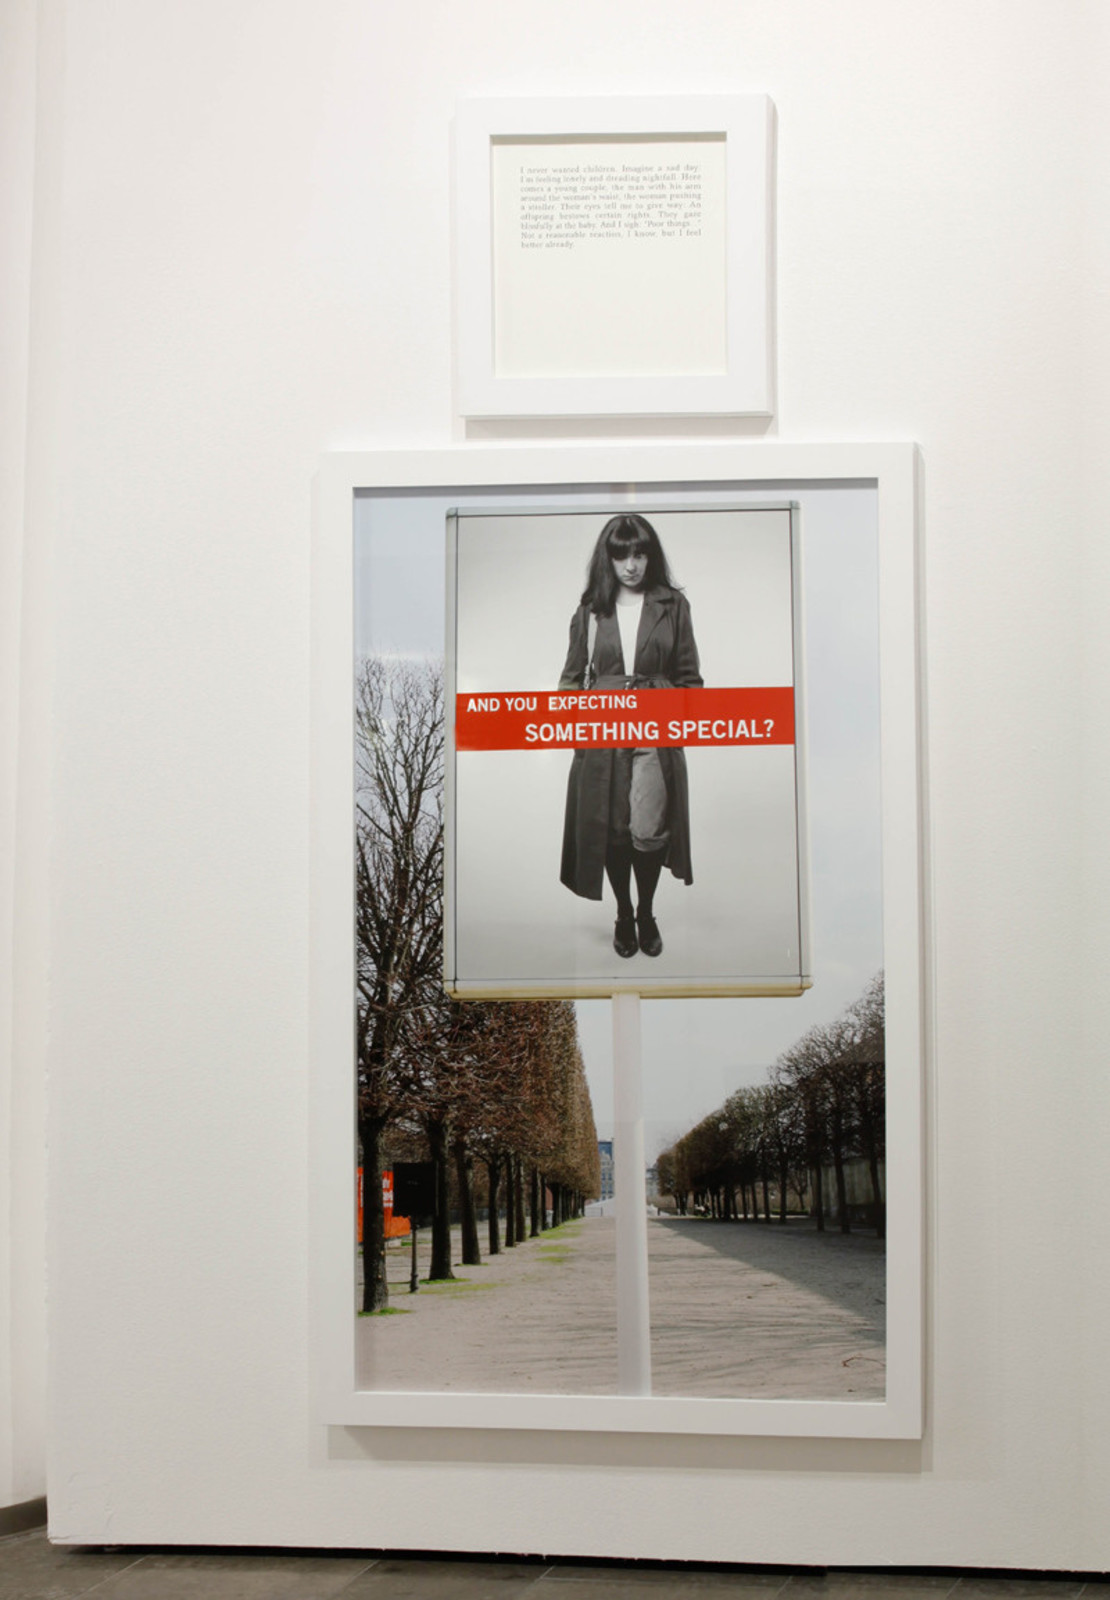 Sophie Calle. To Victor Hasselblad. 2010. Digital print on aluminium, text. 170 x 100 cm